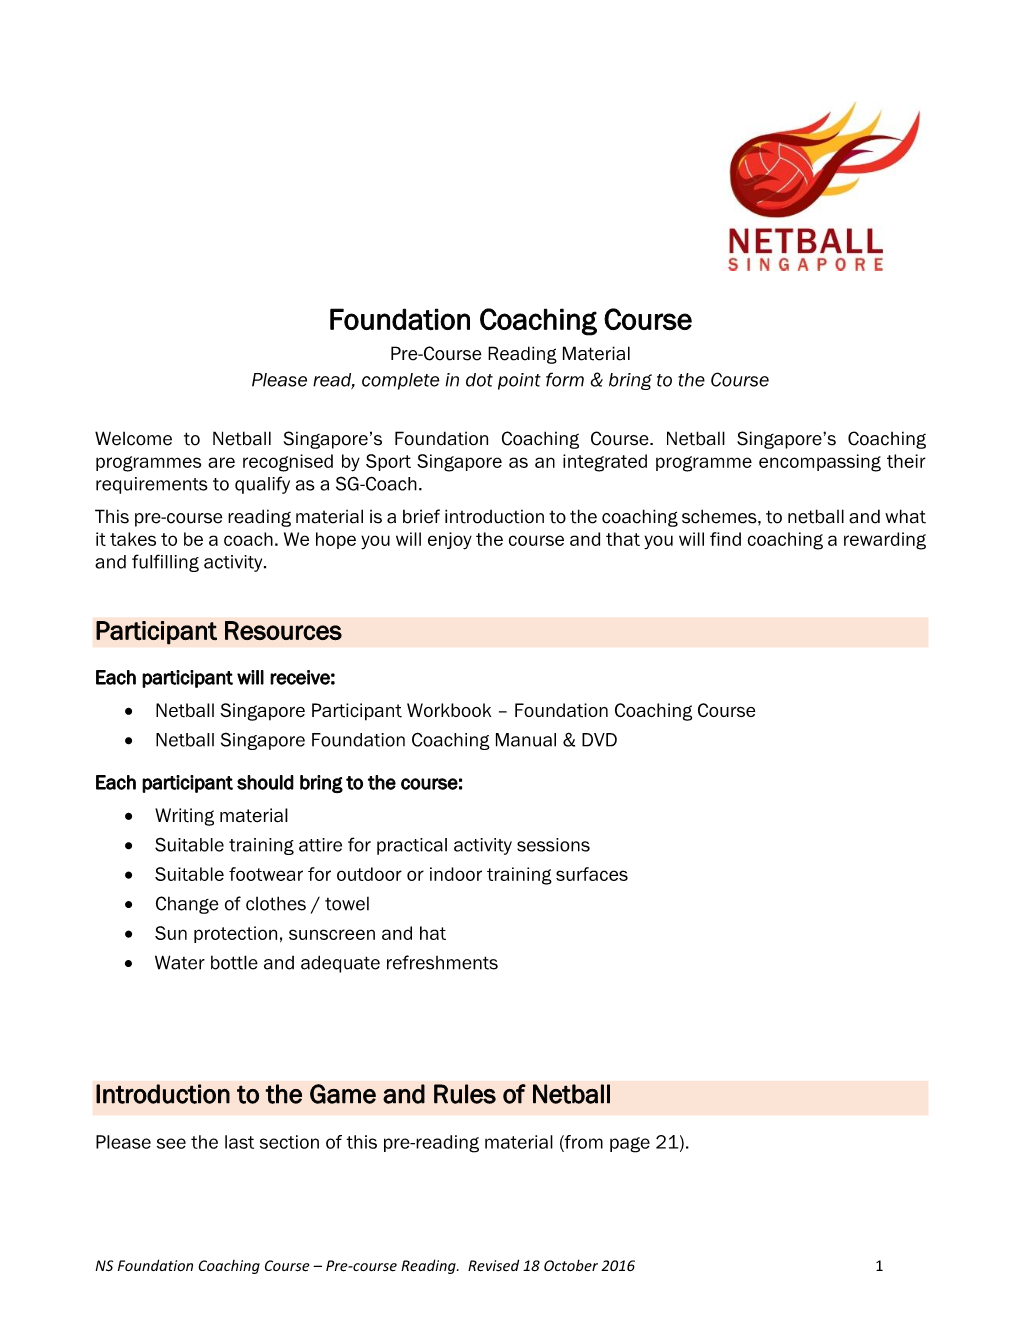 Foundation Coaching Course – Pre-Course Reading